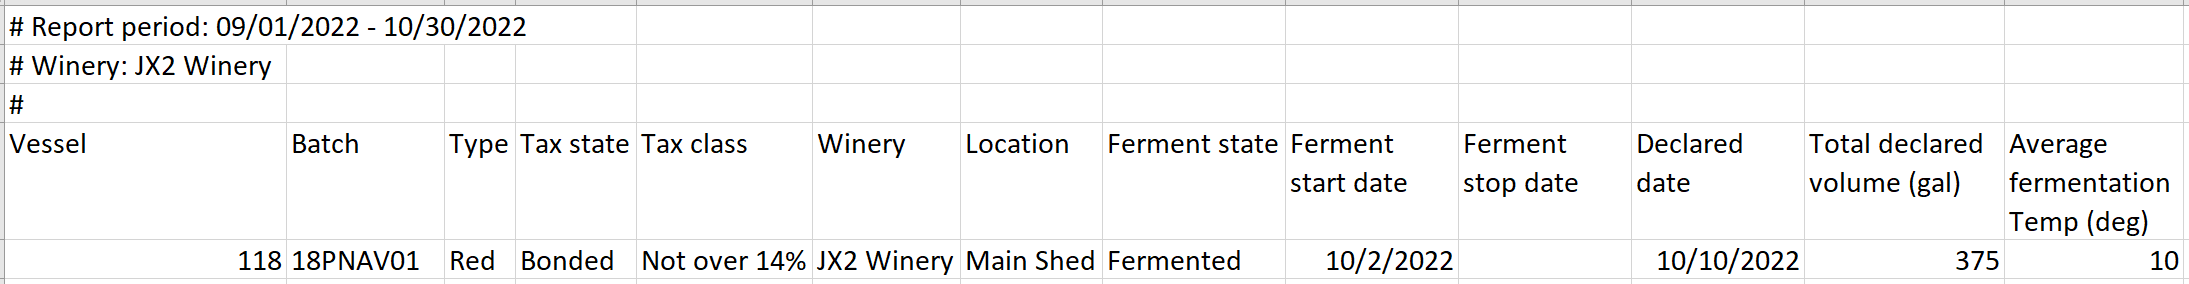 Ferment_Details_Report_-_Example_2.2.png